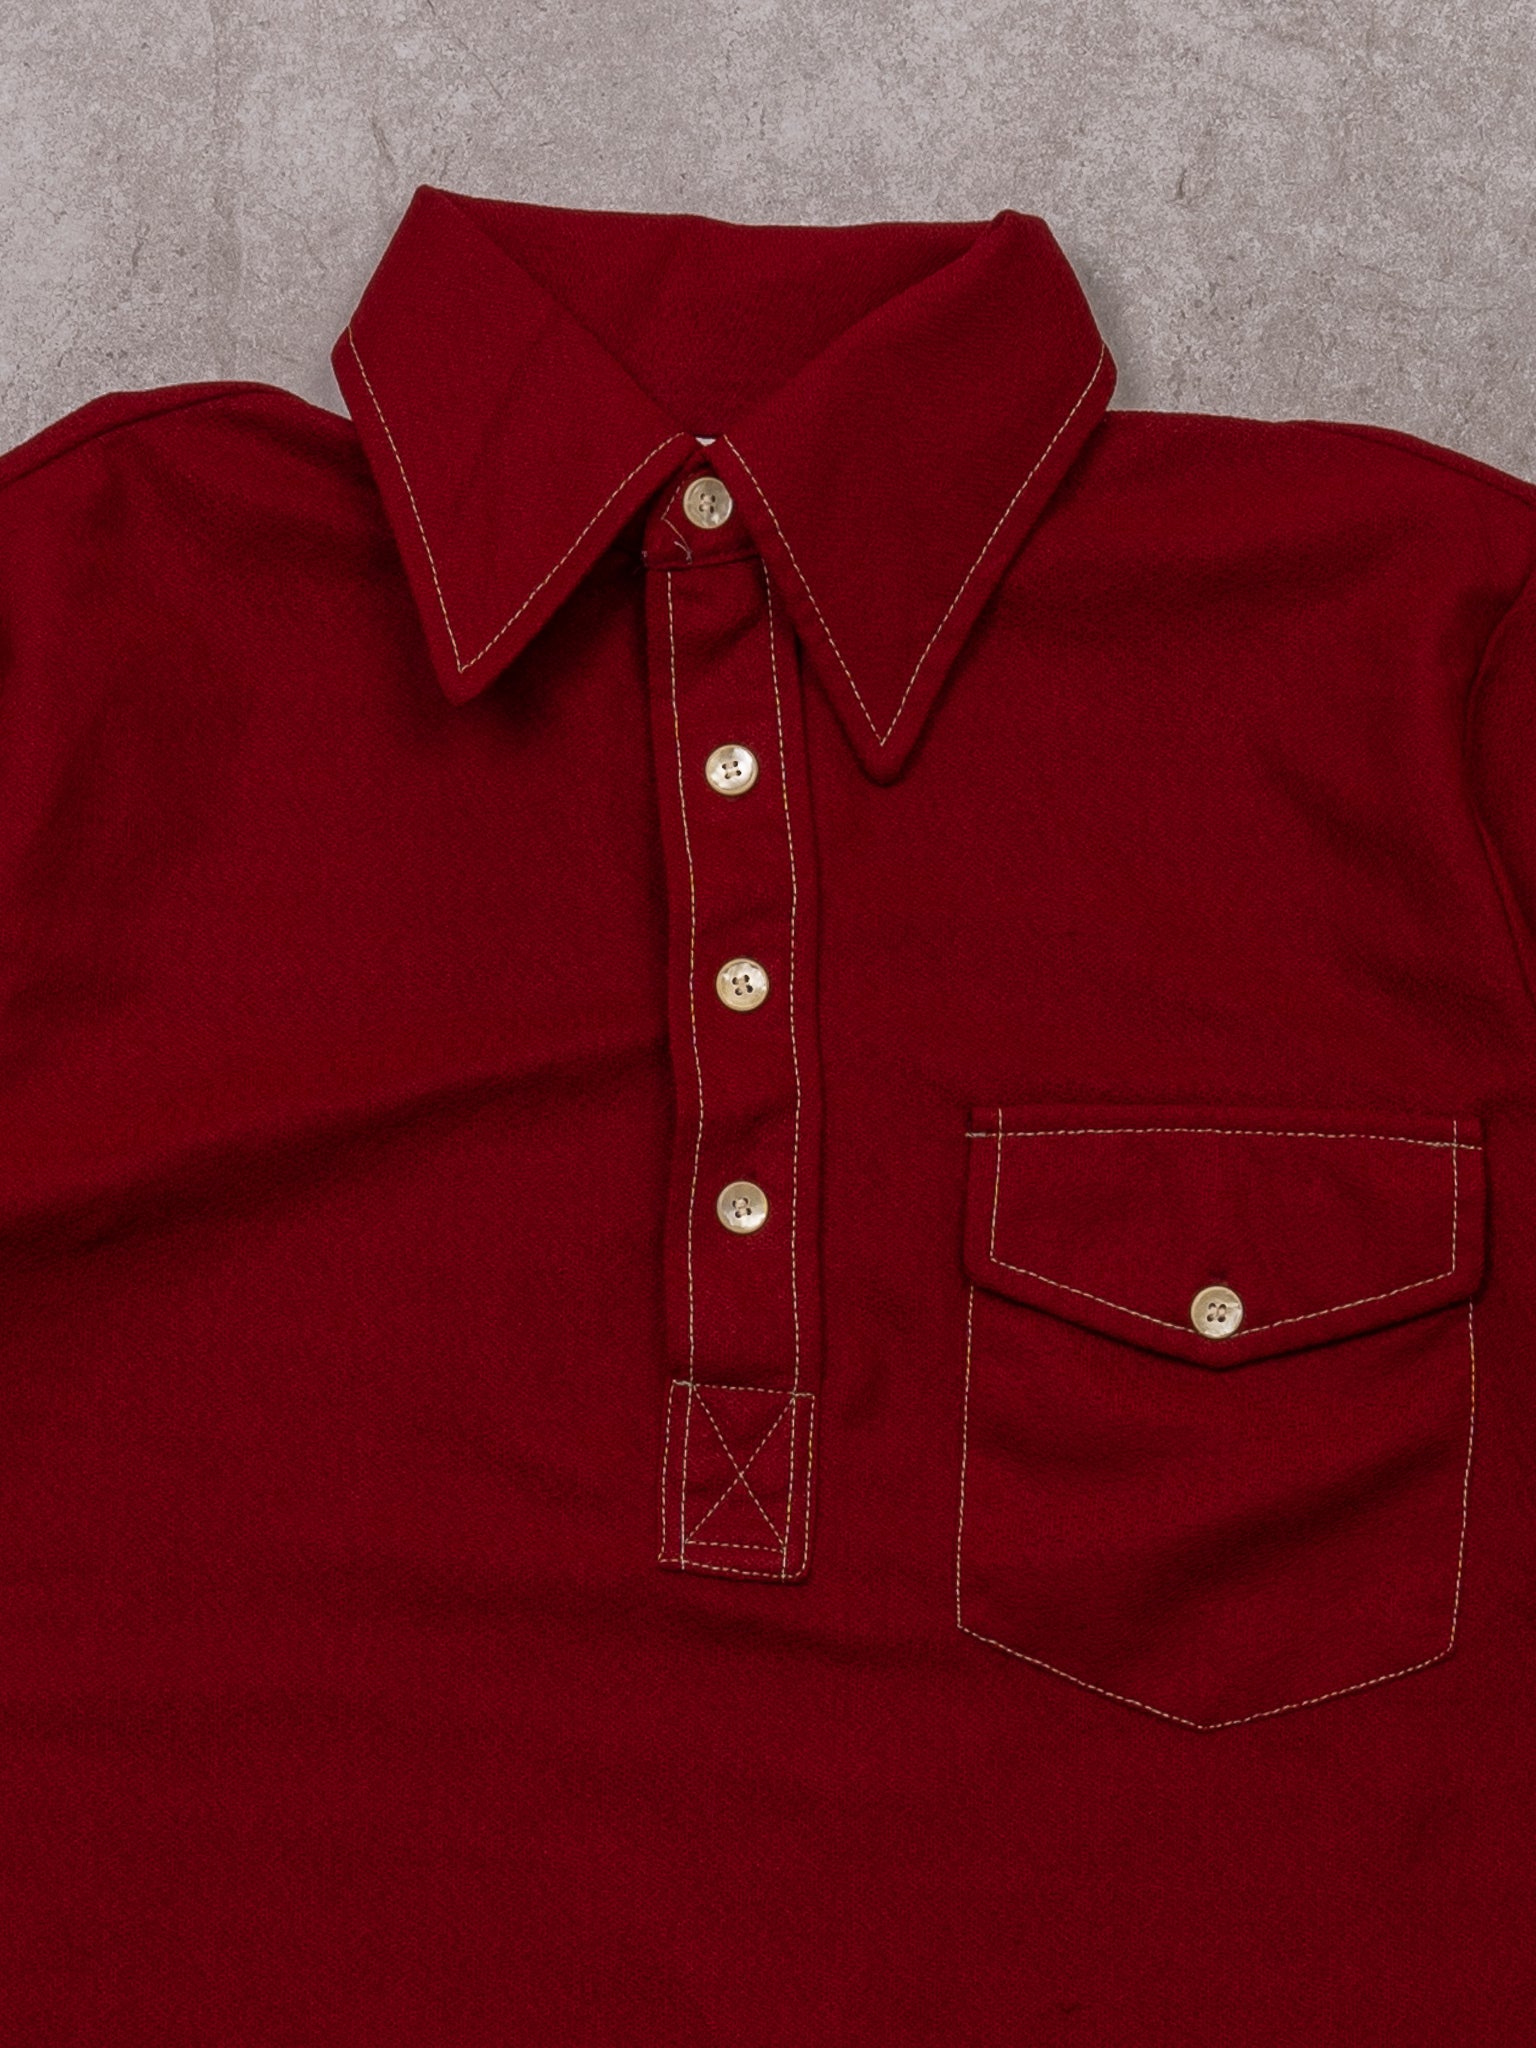 Vintage 70s Maroon + Beige Stitching Polo Dress Shirt (S)